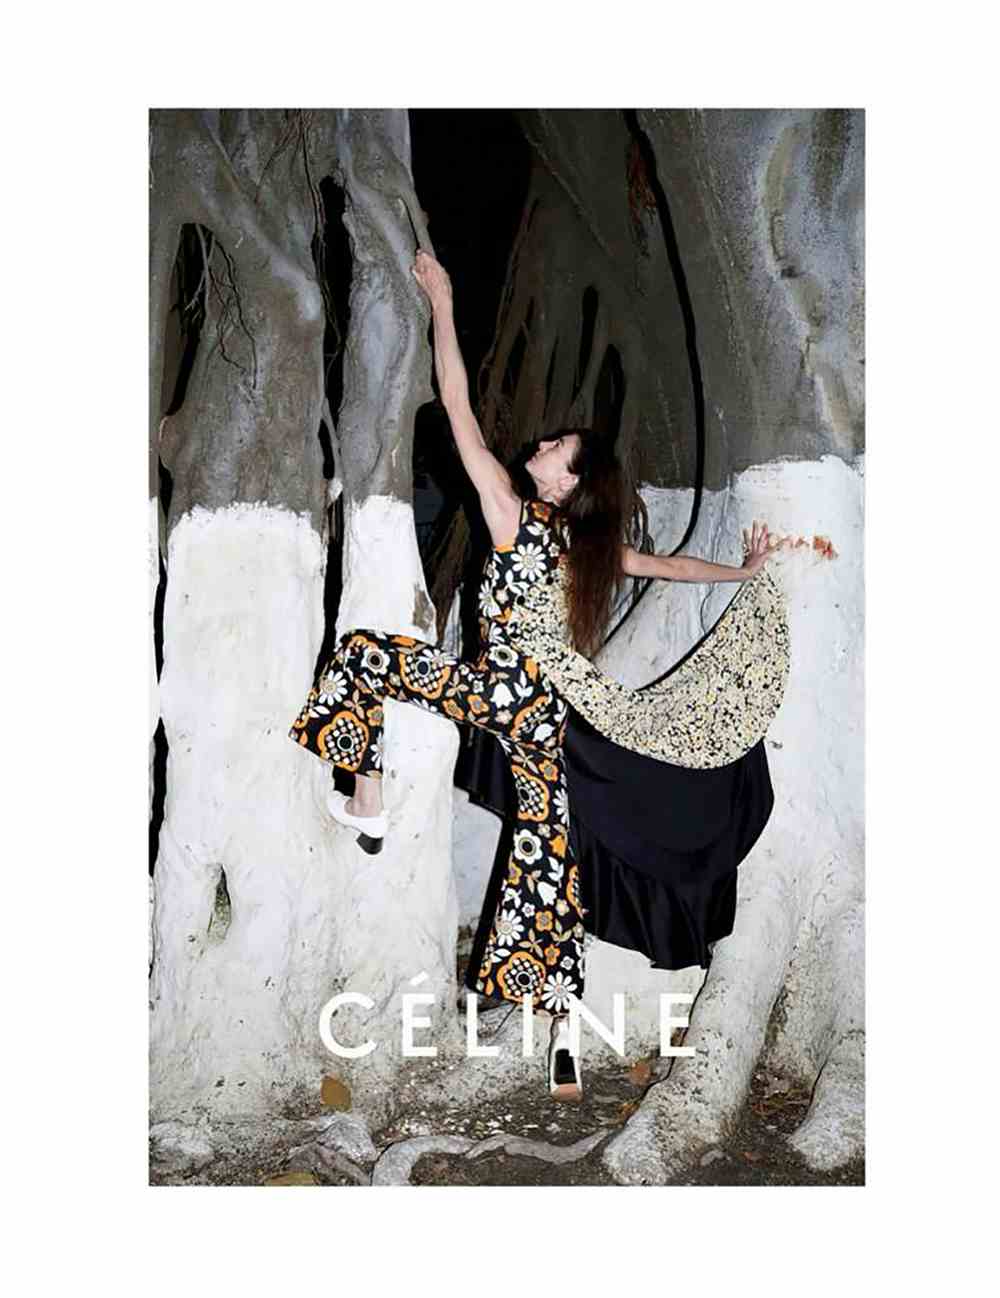 CÉLINE - S/S 2015
Photographer: Juergen Teller
Model: Freya Lawrence - Joan Didion
Stylist: Phoebe Philo 
Location: Tangers - Morocco